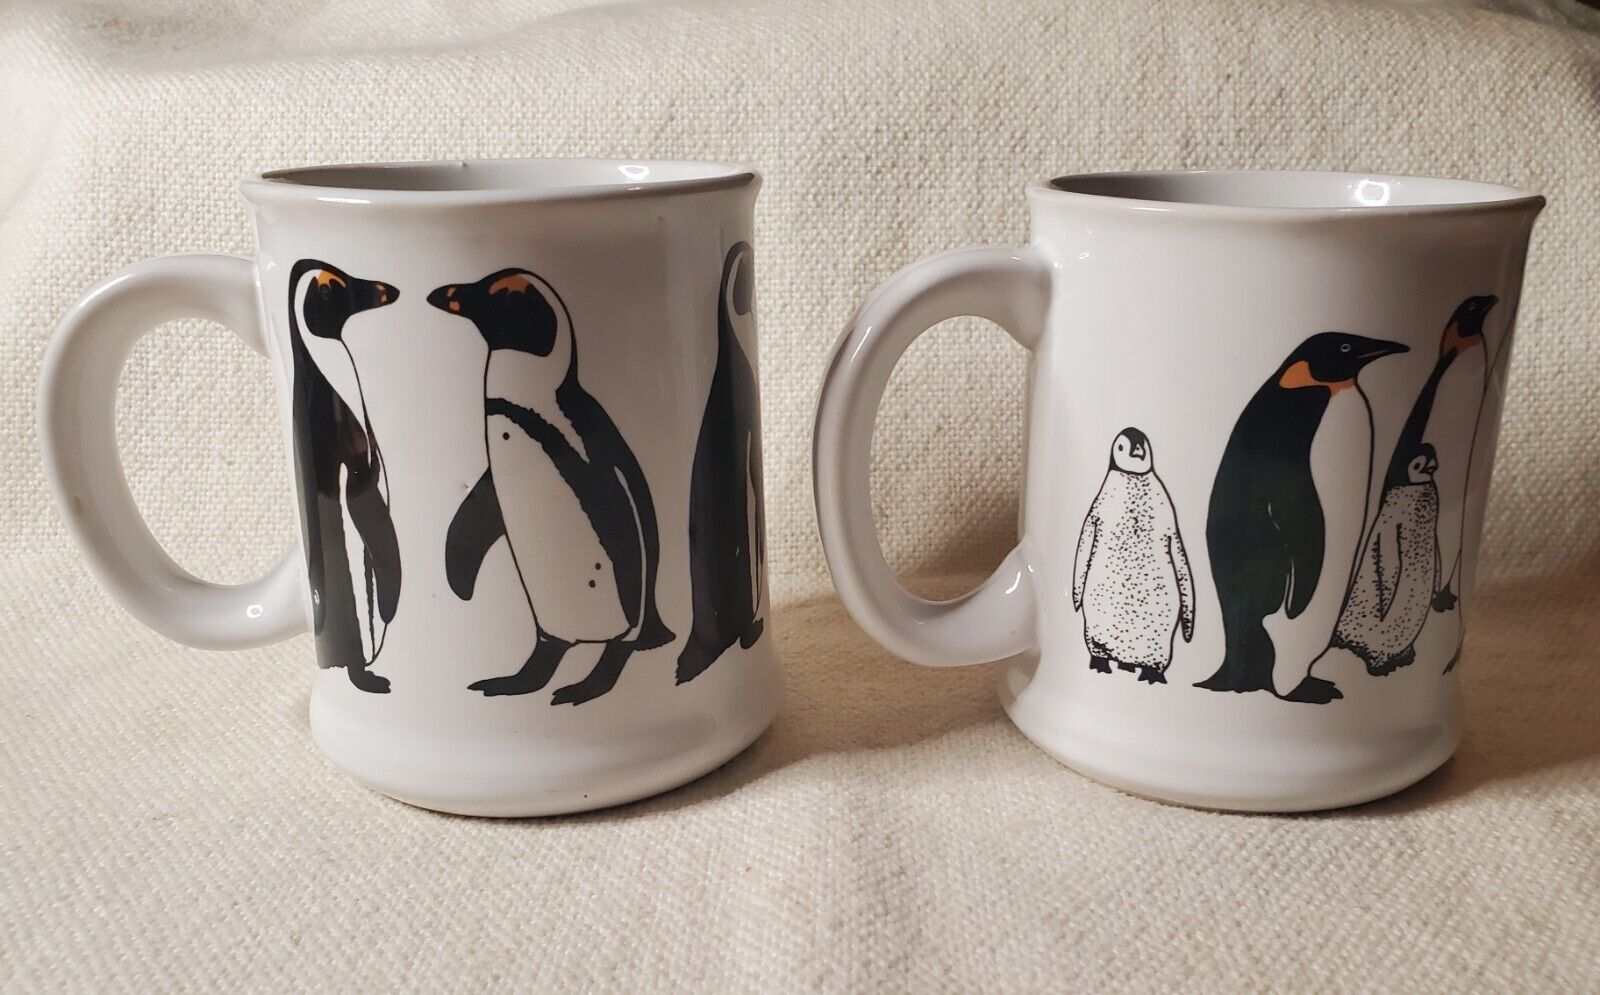 Vintage Penguin Ceramic Coffee Mugs Lot of 2 Debi \'84 Artist Penguin Mugs Cups 